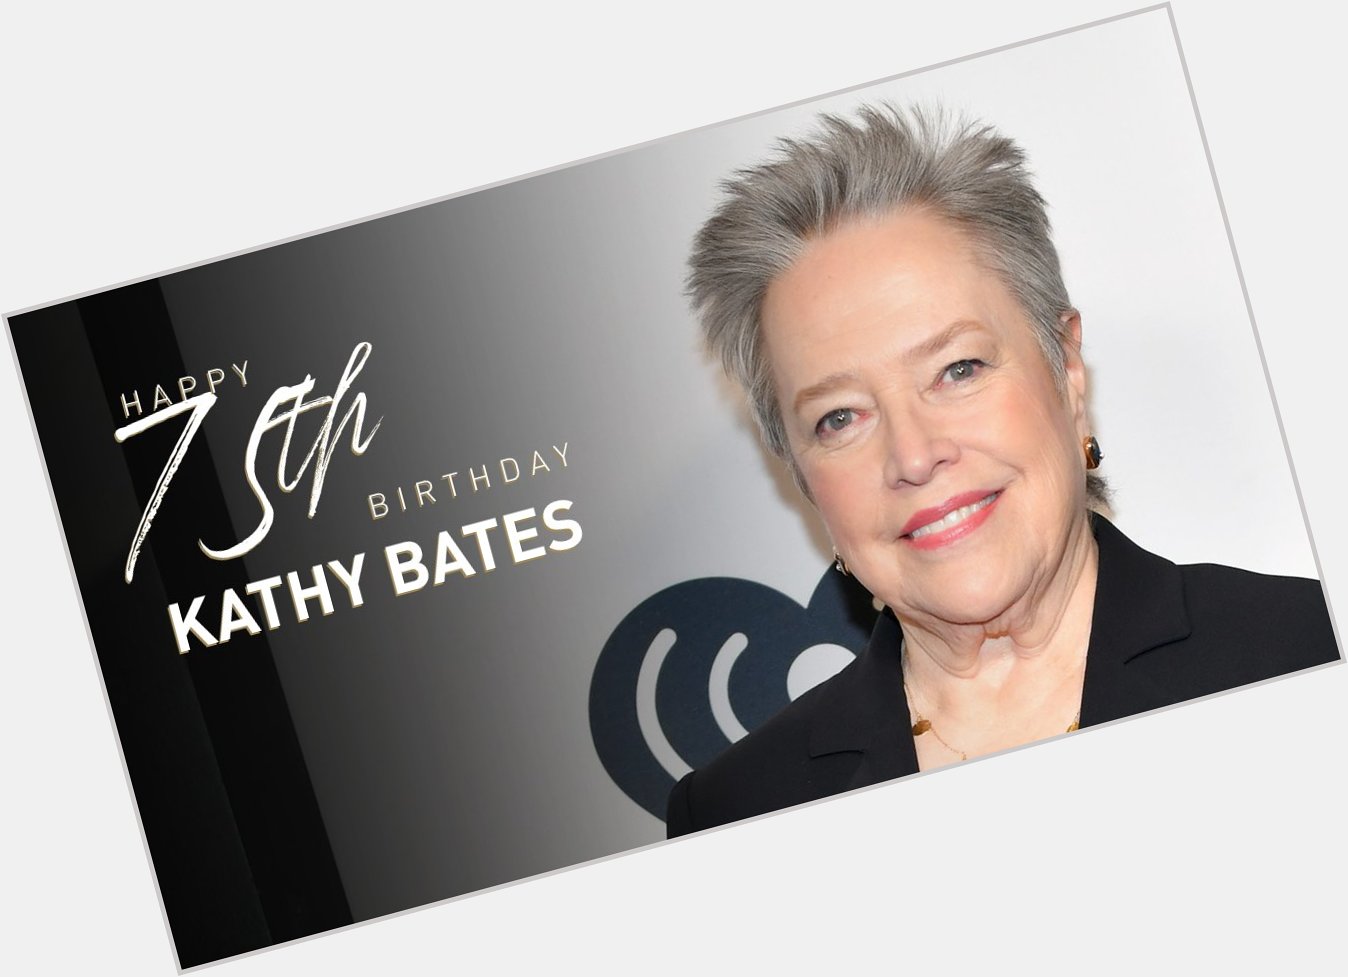 Happy 75th Birthday, Kathy Bates 